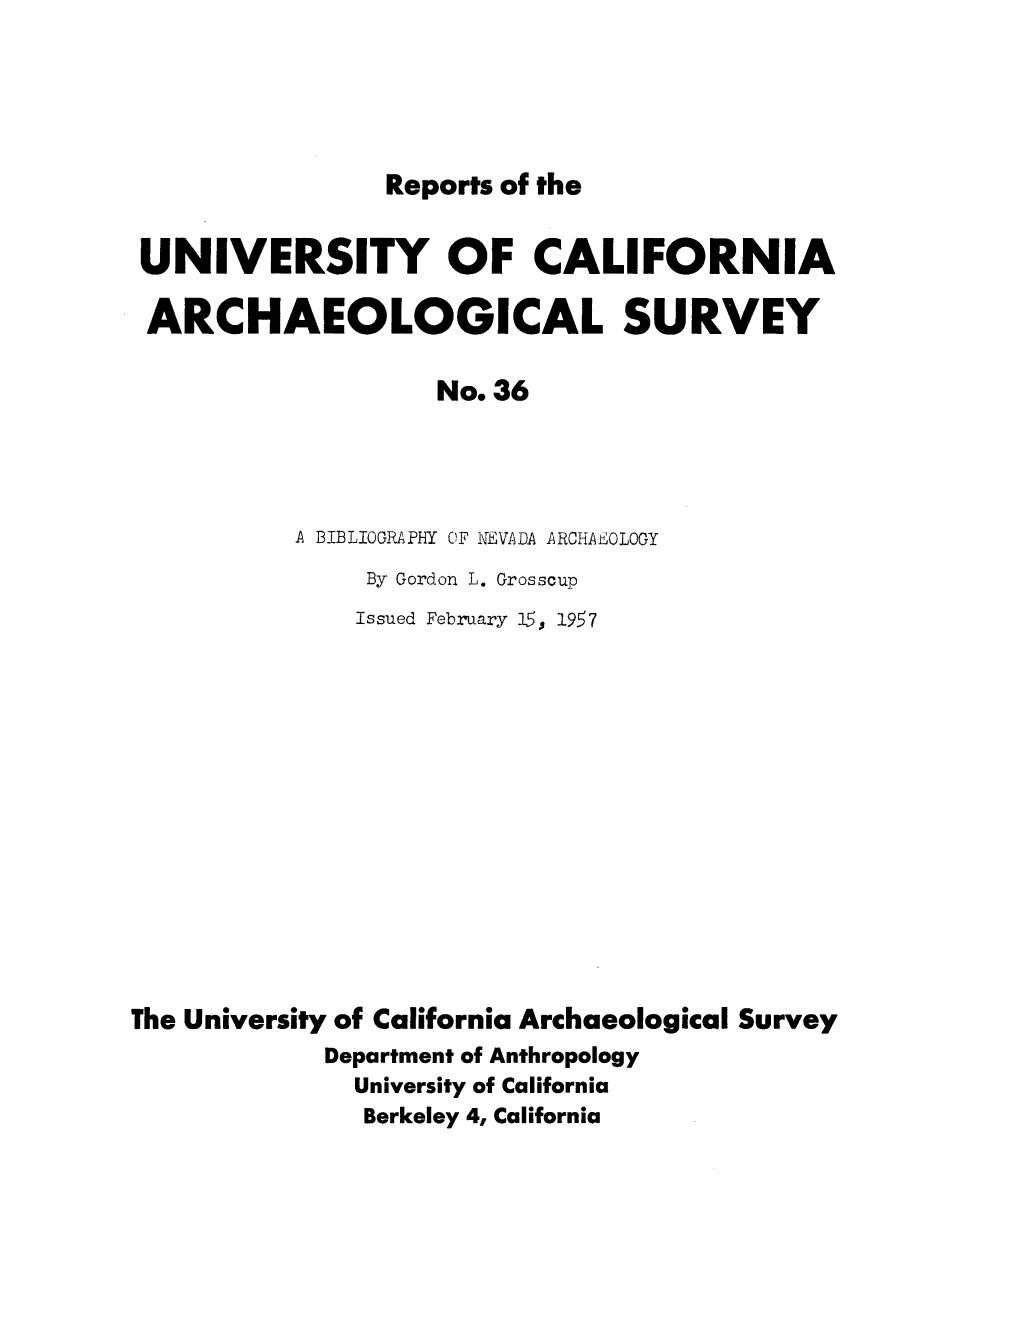 UNIVERSITY of CALIFORNIA ARCHAEOLOGICAL SURVEY No.36